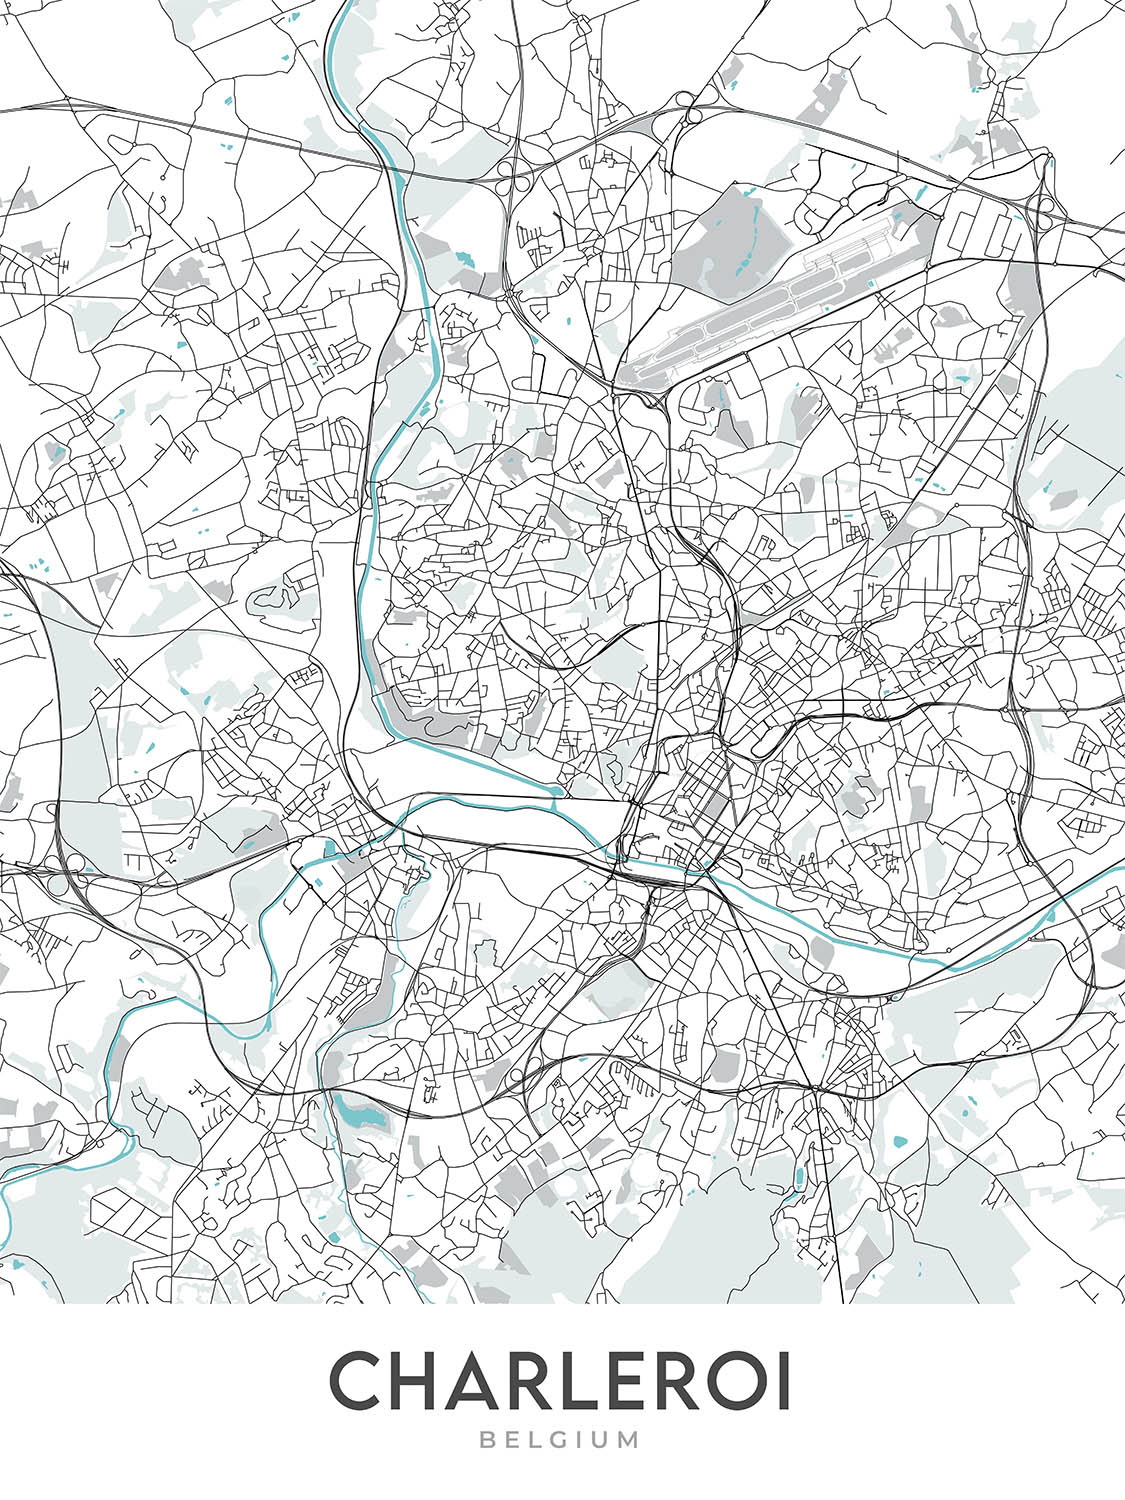 Modern City Map of Charleroi, Belgium: City Centre, Airport, Stadium, University, Museum